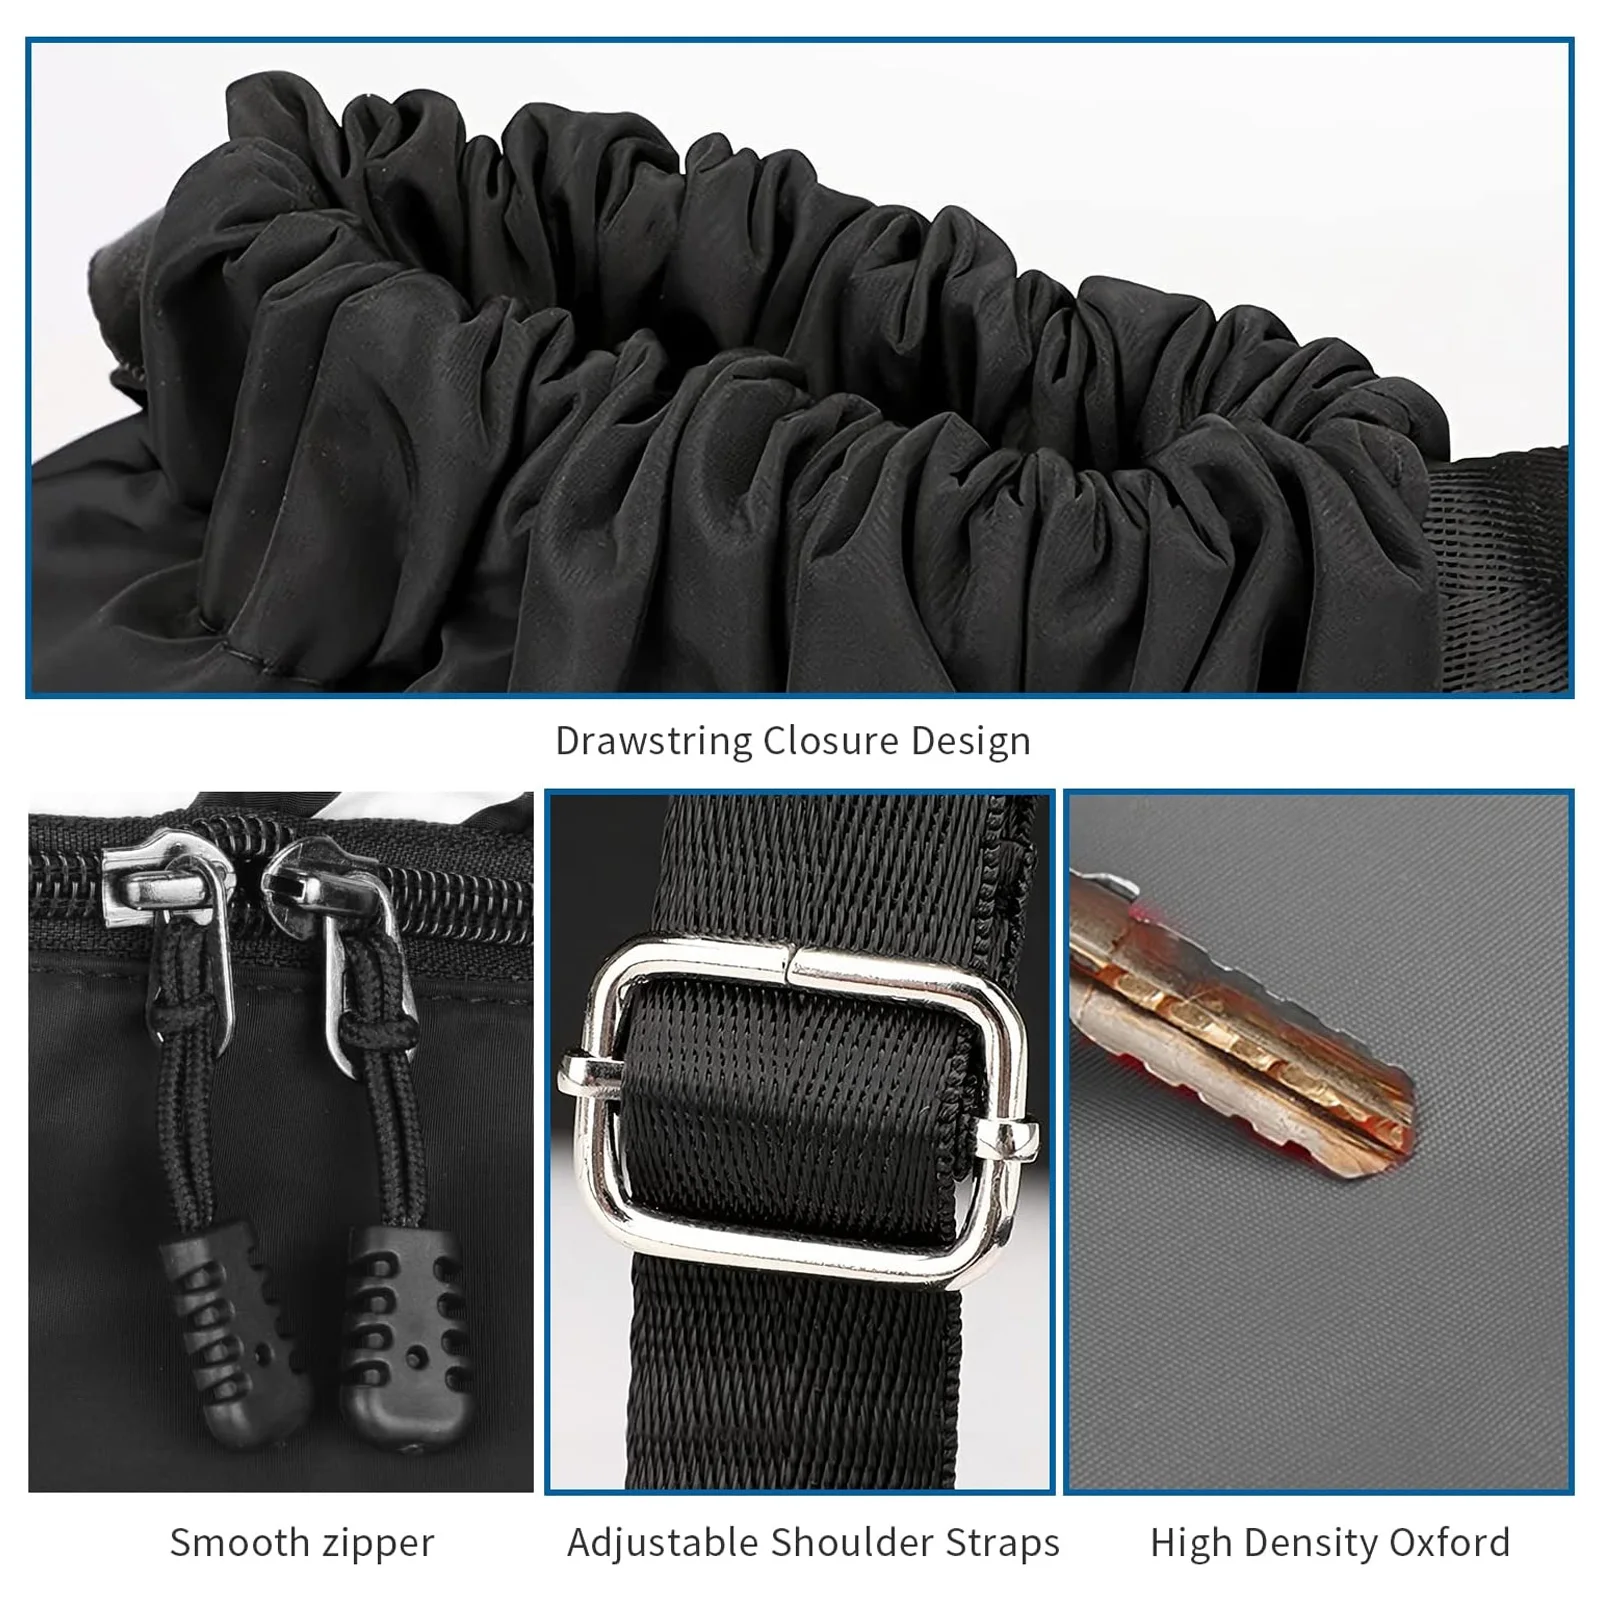 Fashion multi-pocket design waterproof rope bag Gym sports with shoe room side mesh bag pull rope backpack